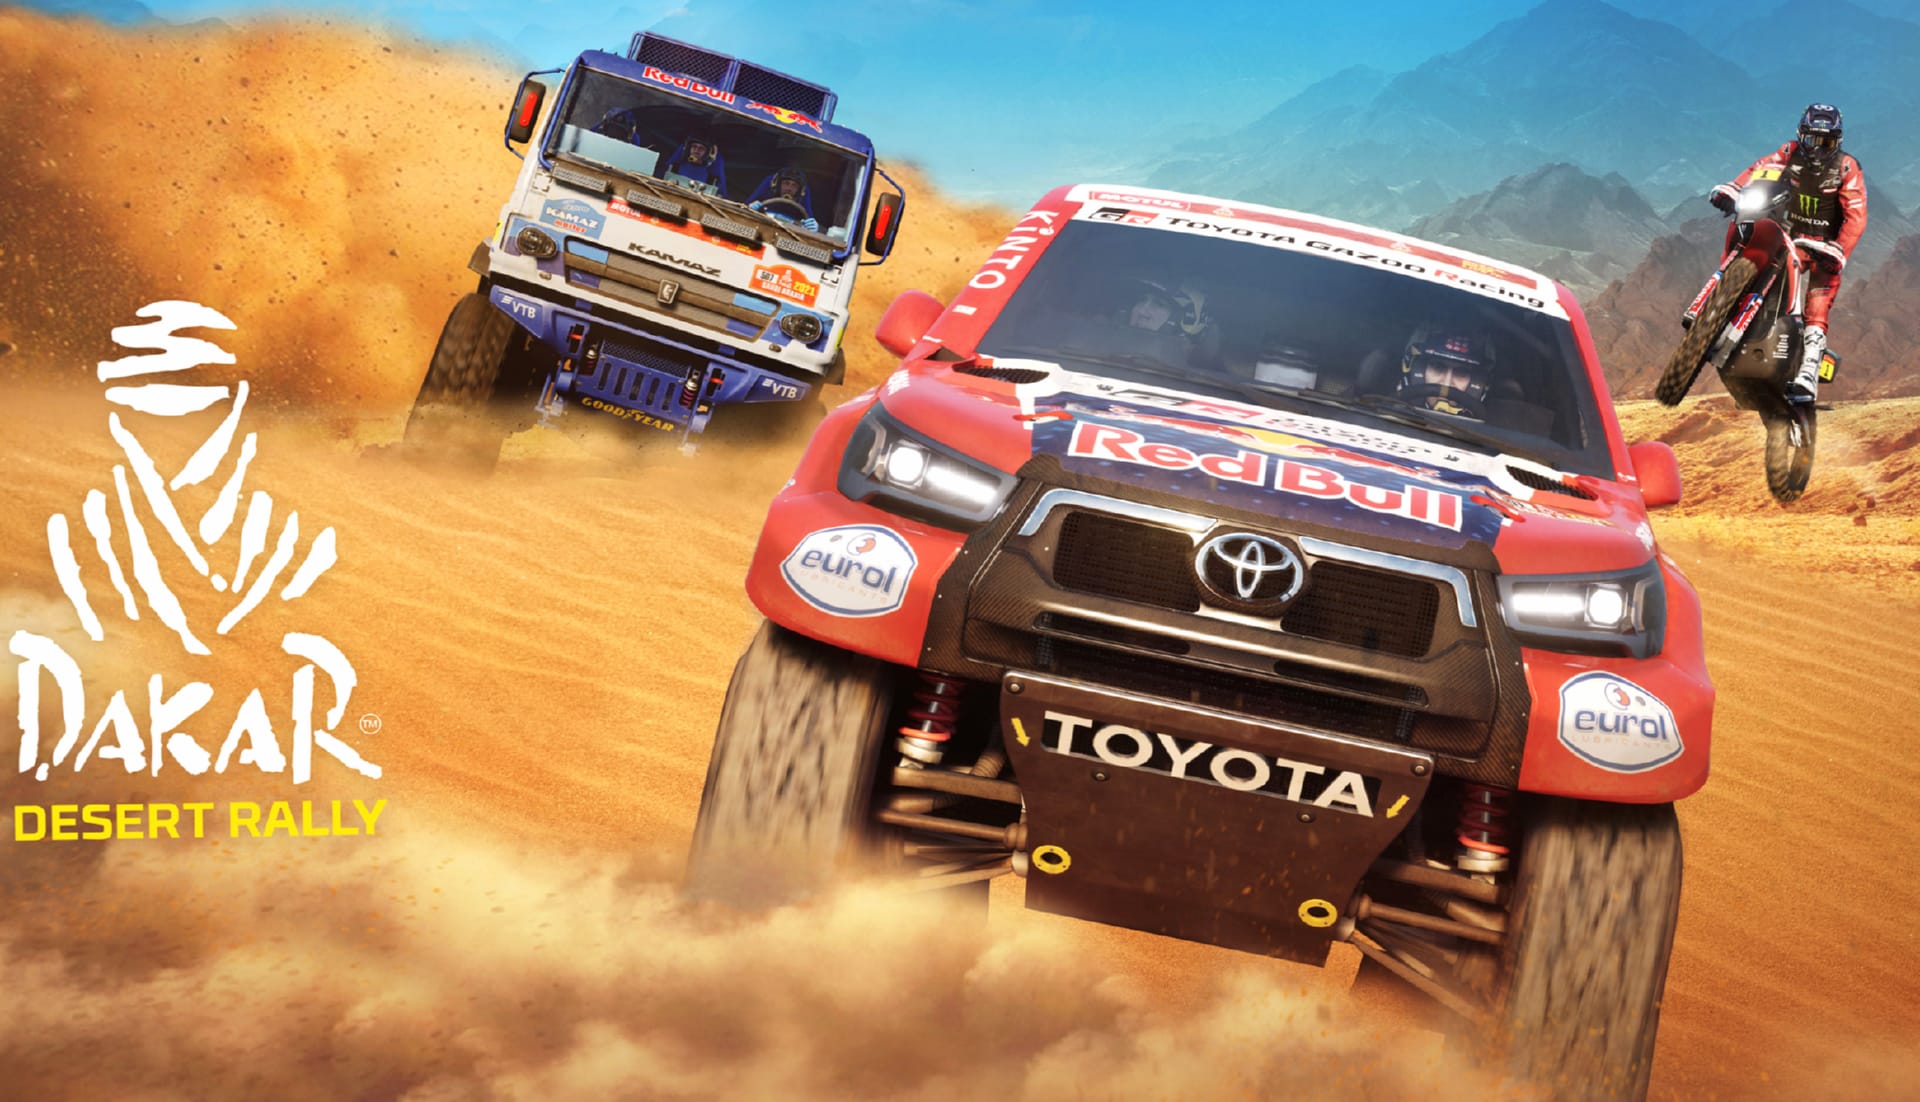 Dakar Desert Rally at 2048 x 2048 iPad size wallpapers HD quality